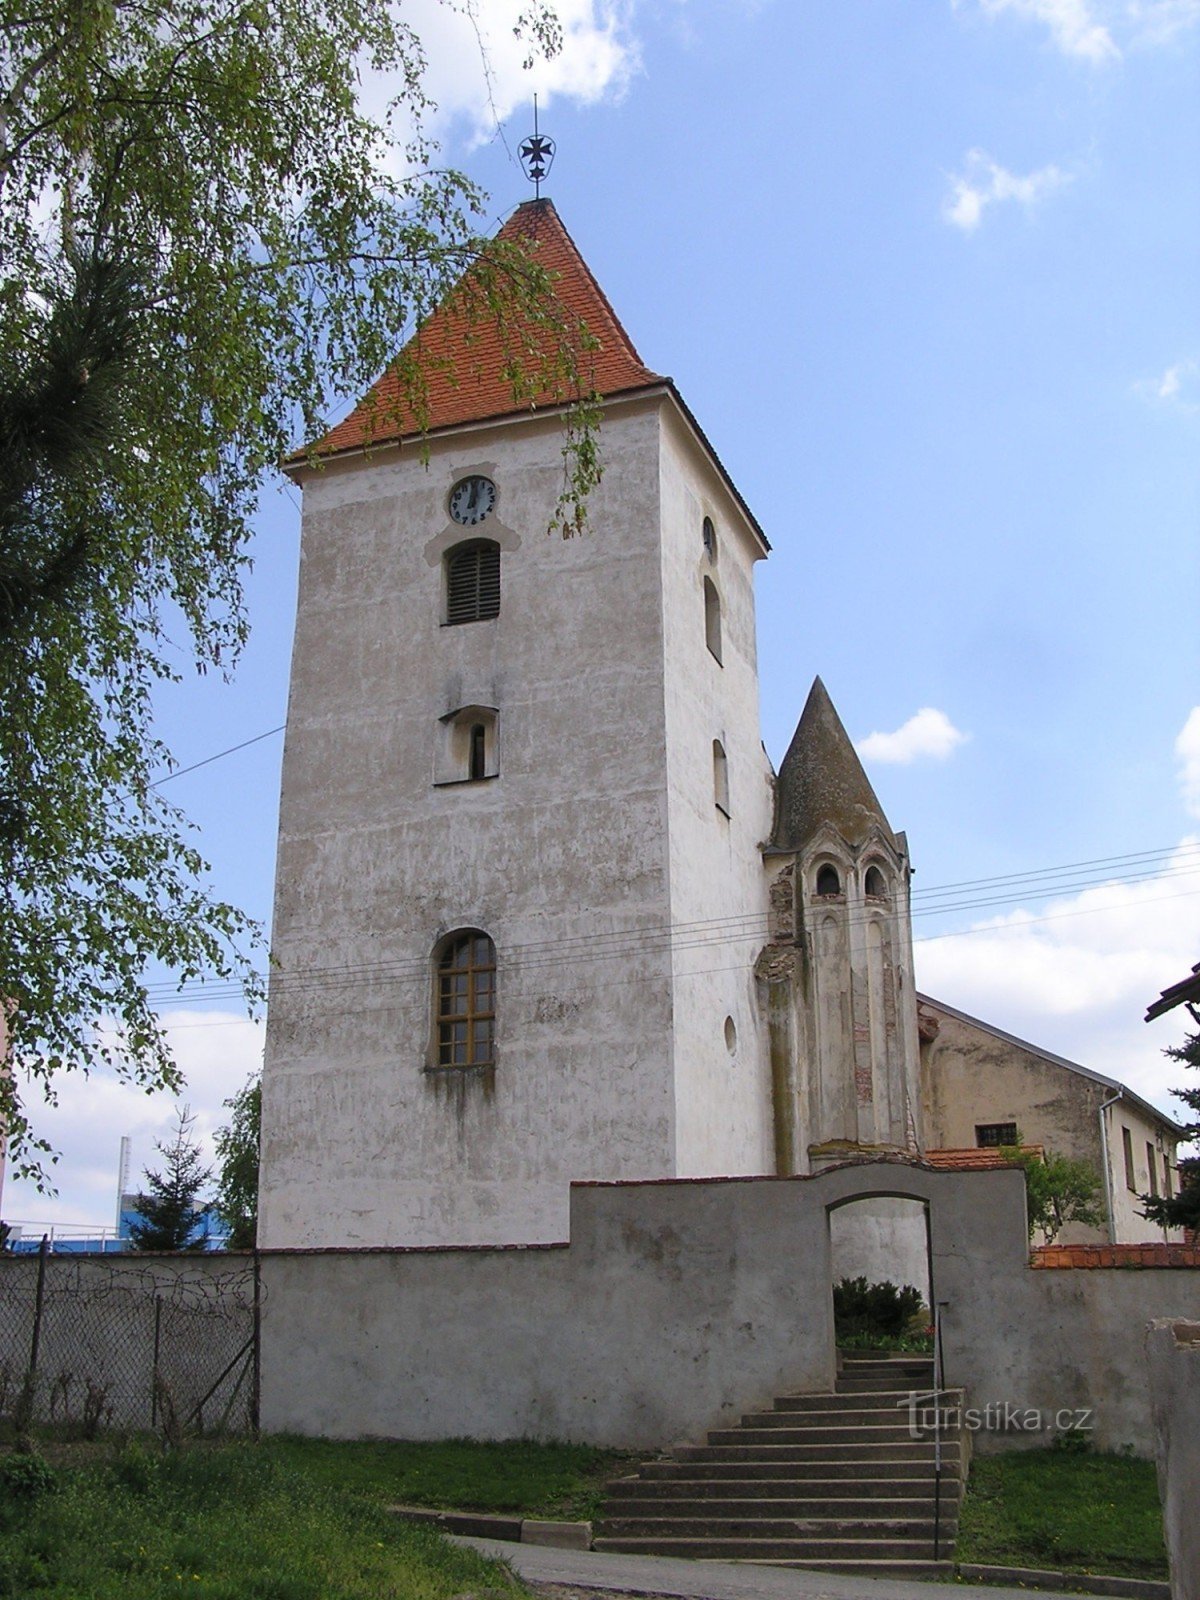 St. Jakob den äldres kyrka i Hodonice - 21.4.2005